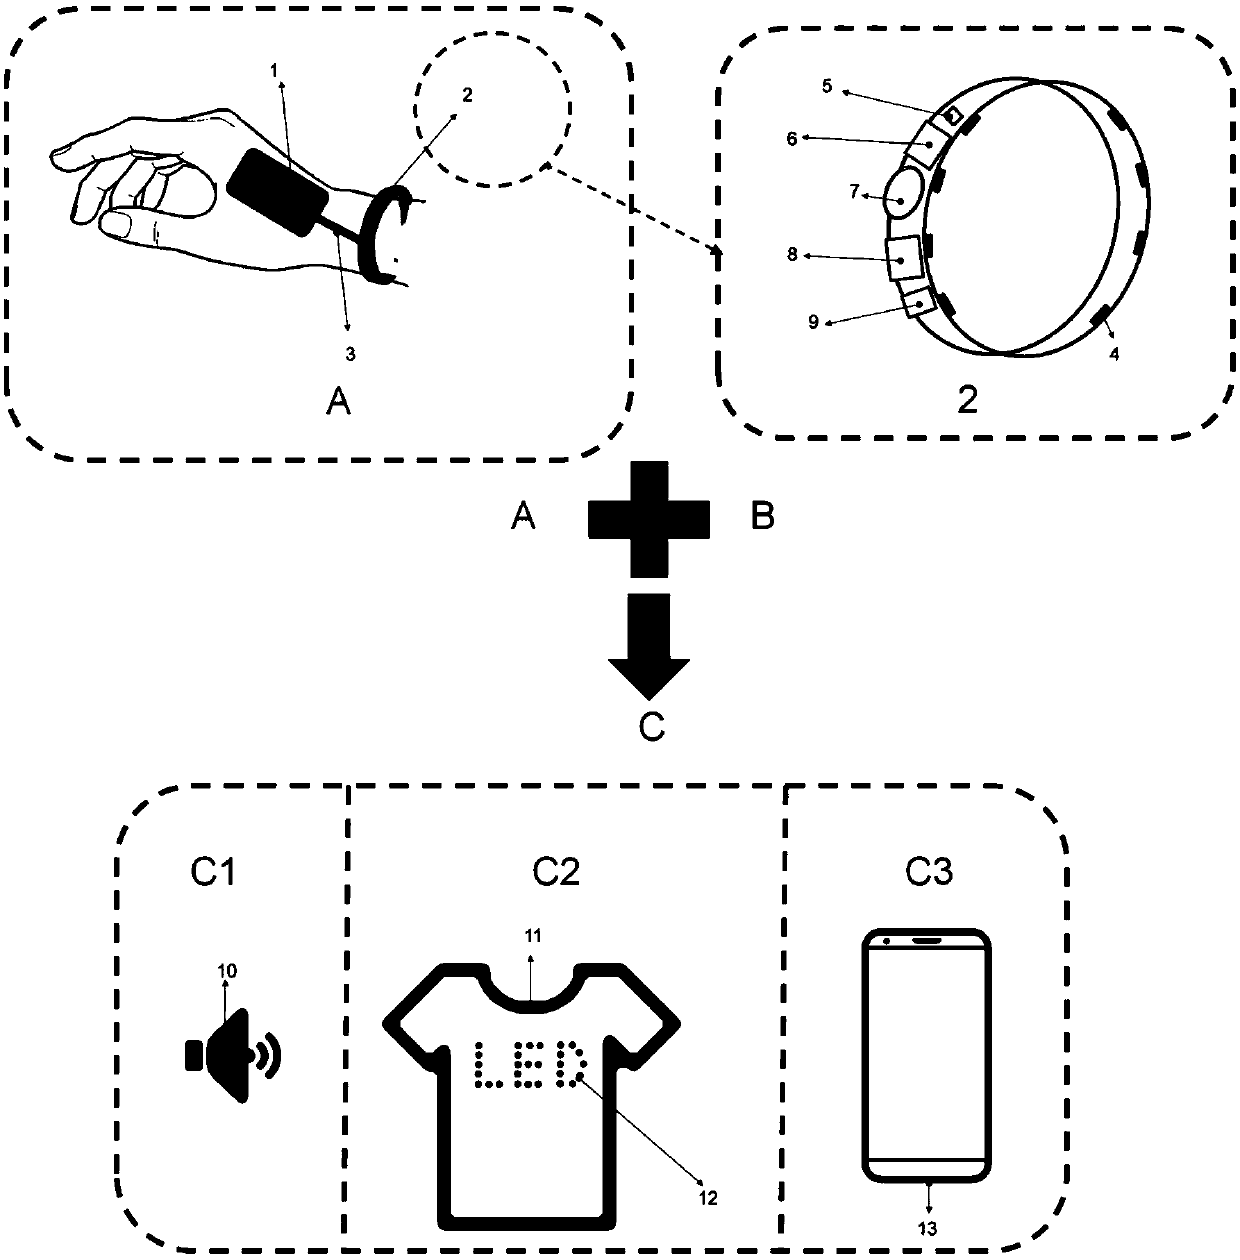 Electronic skin and multi-sensor fusion-based sign language identification system